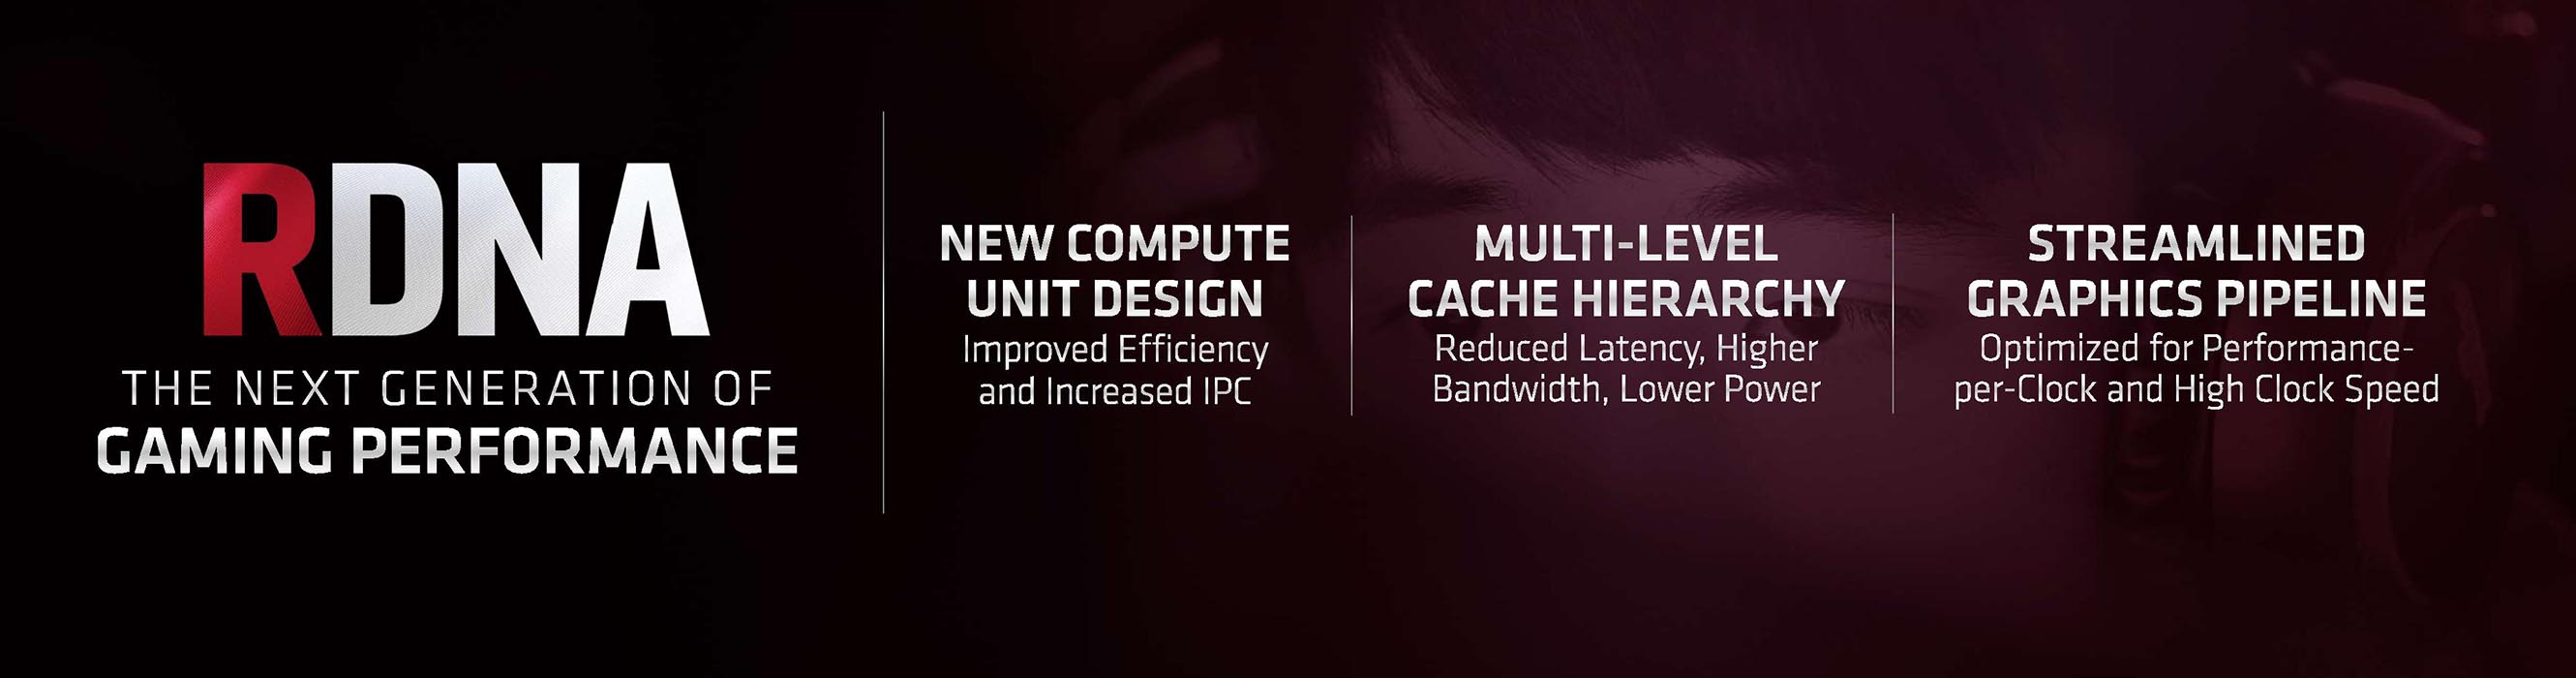 AMD_Radeon_DN_RDN_Arquitectura_Benchmark